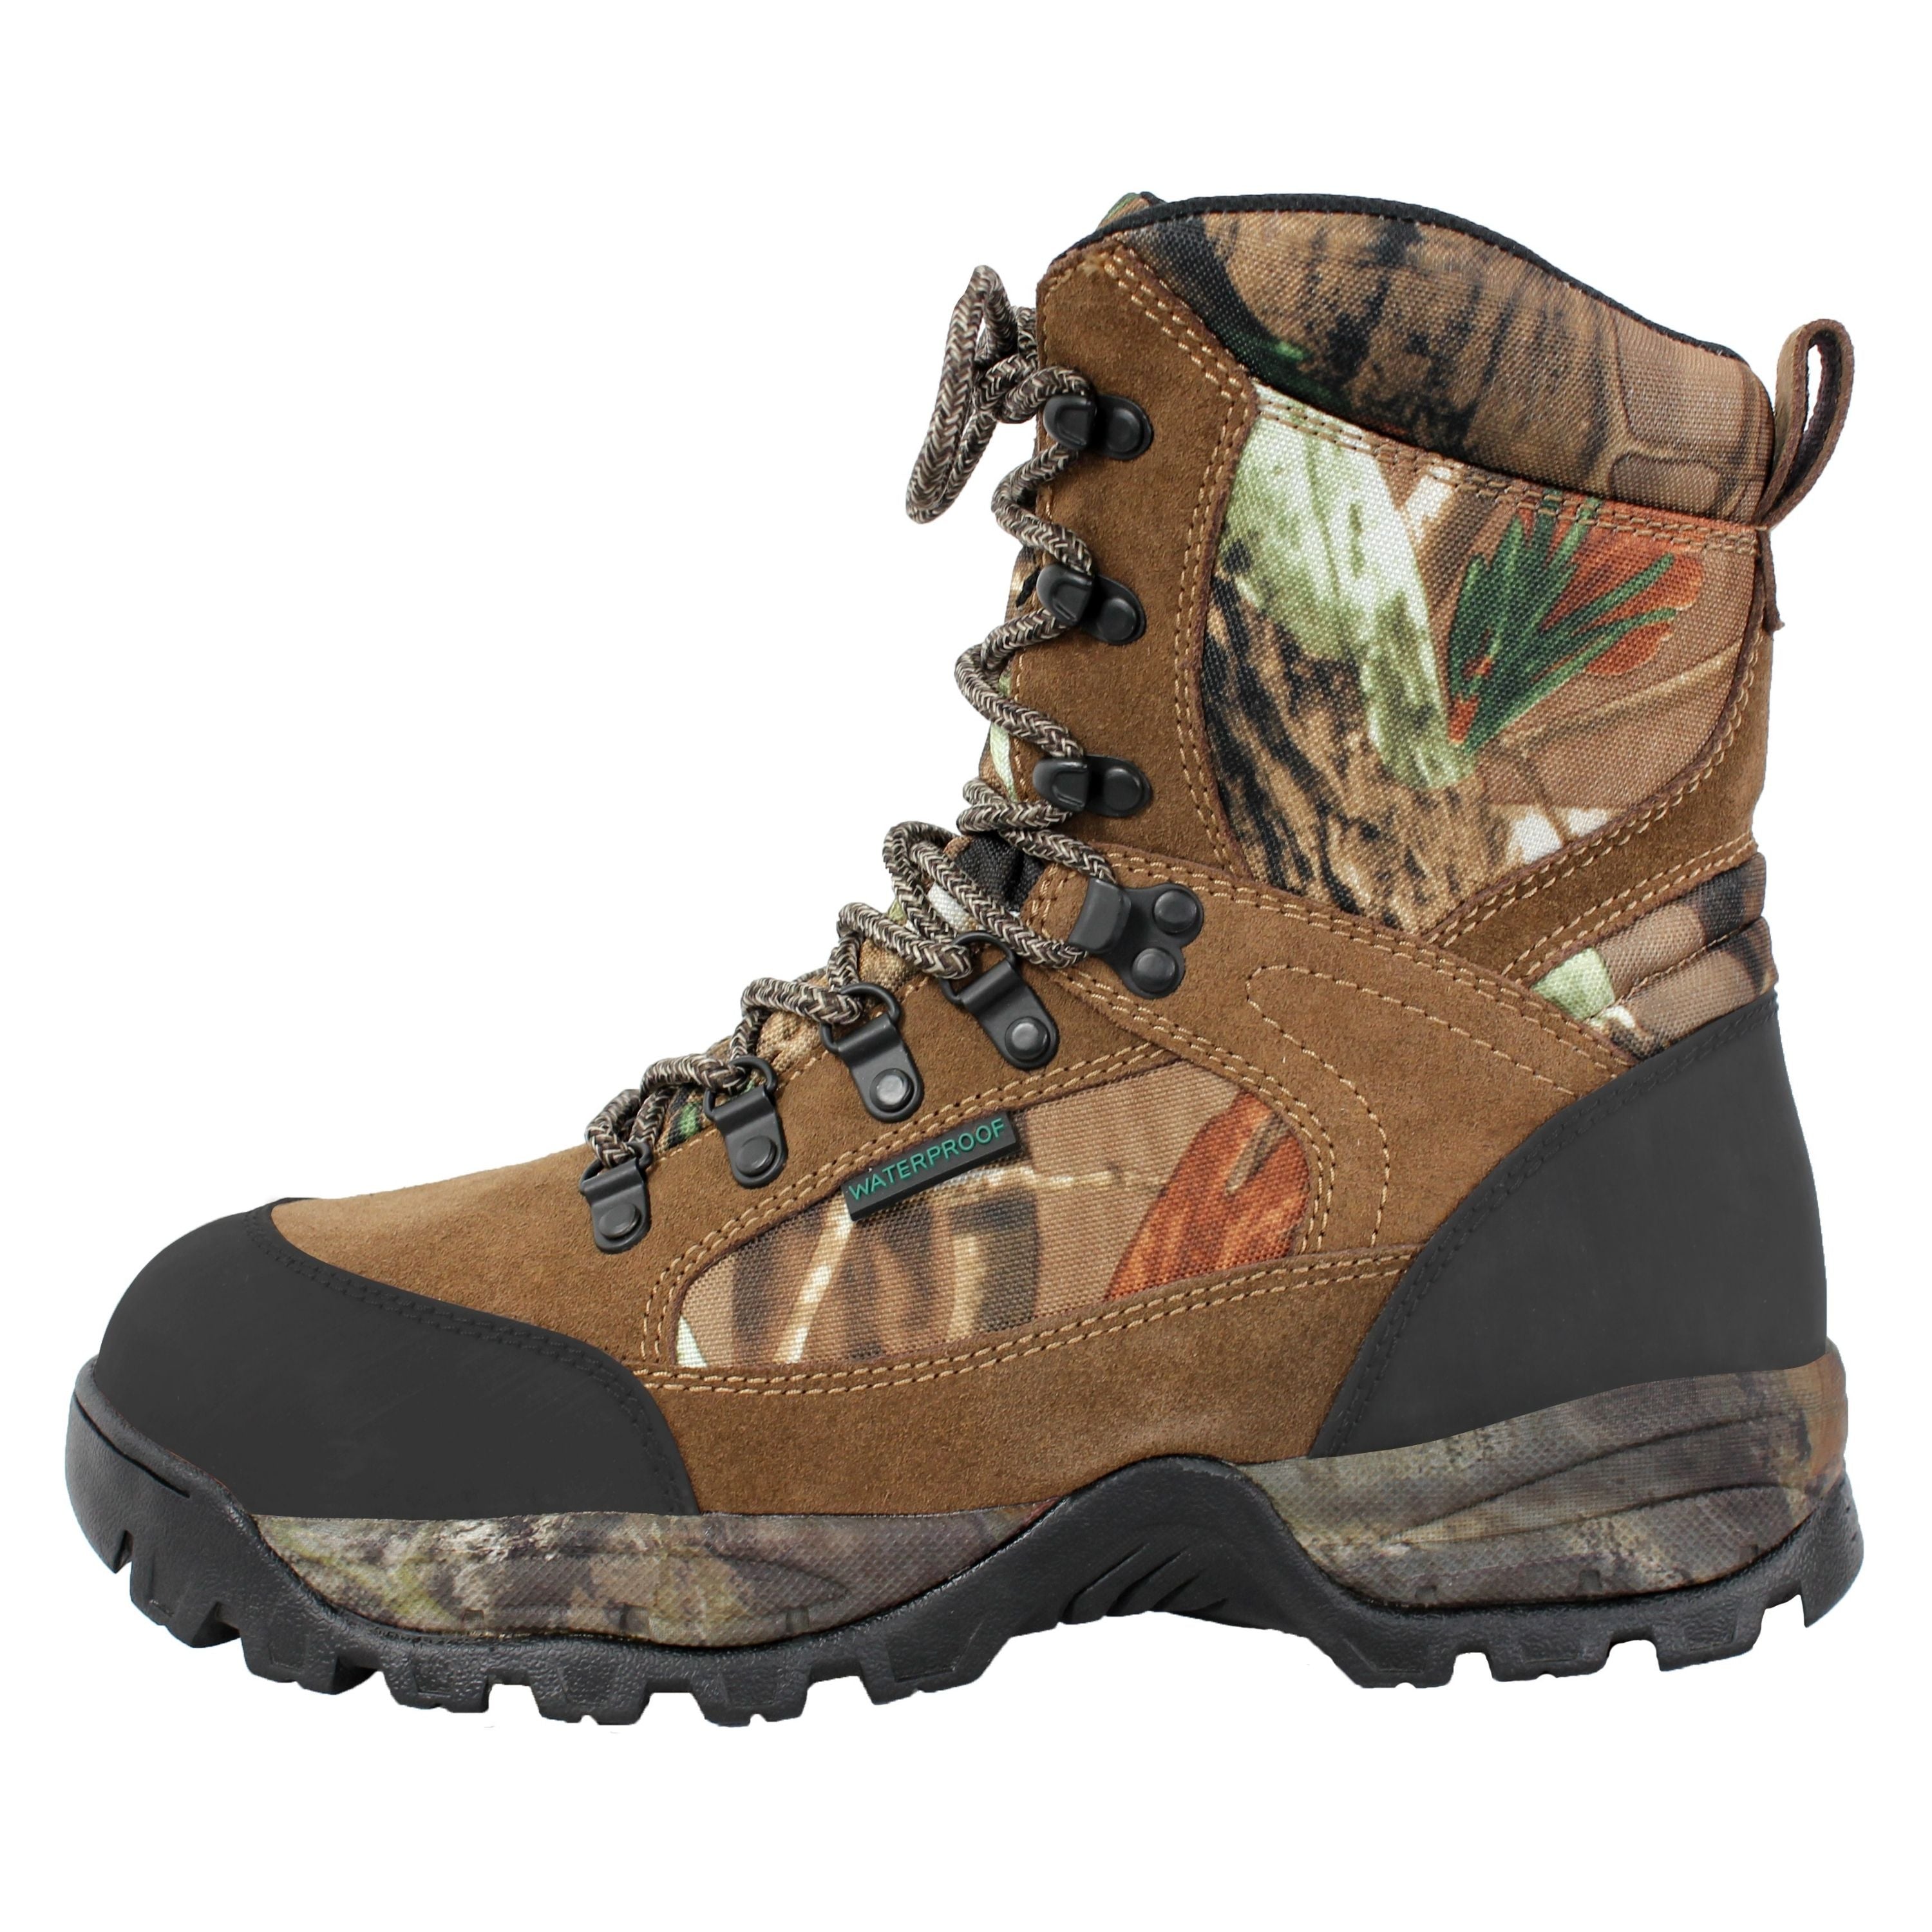 Camo access trail boots - Men's